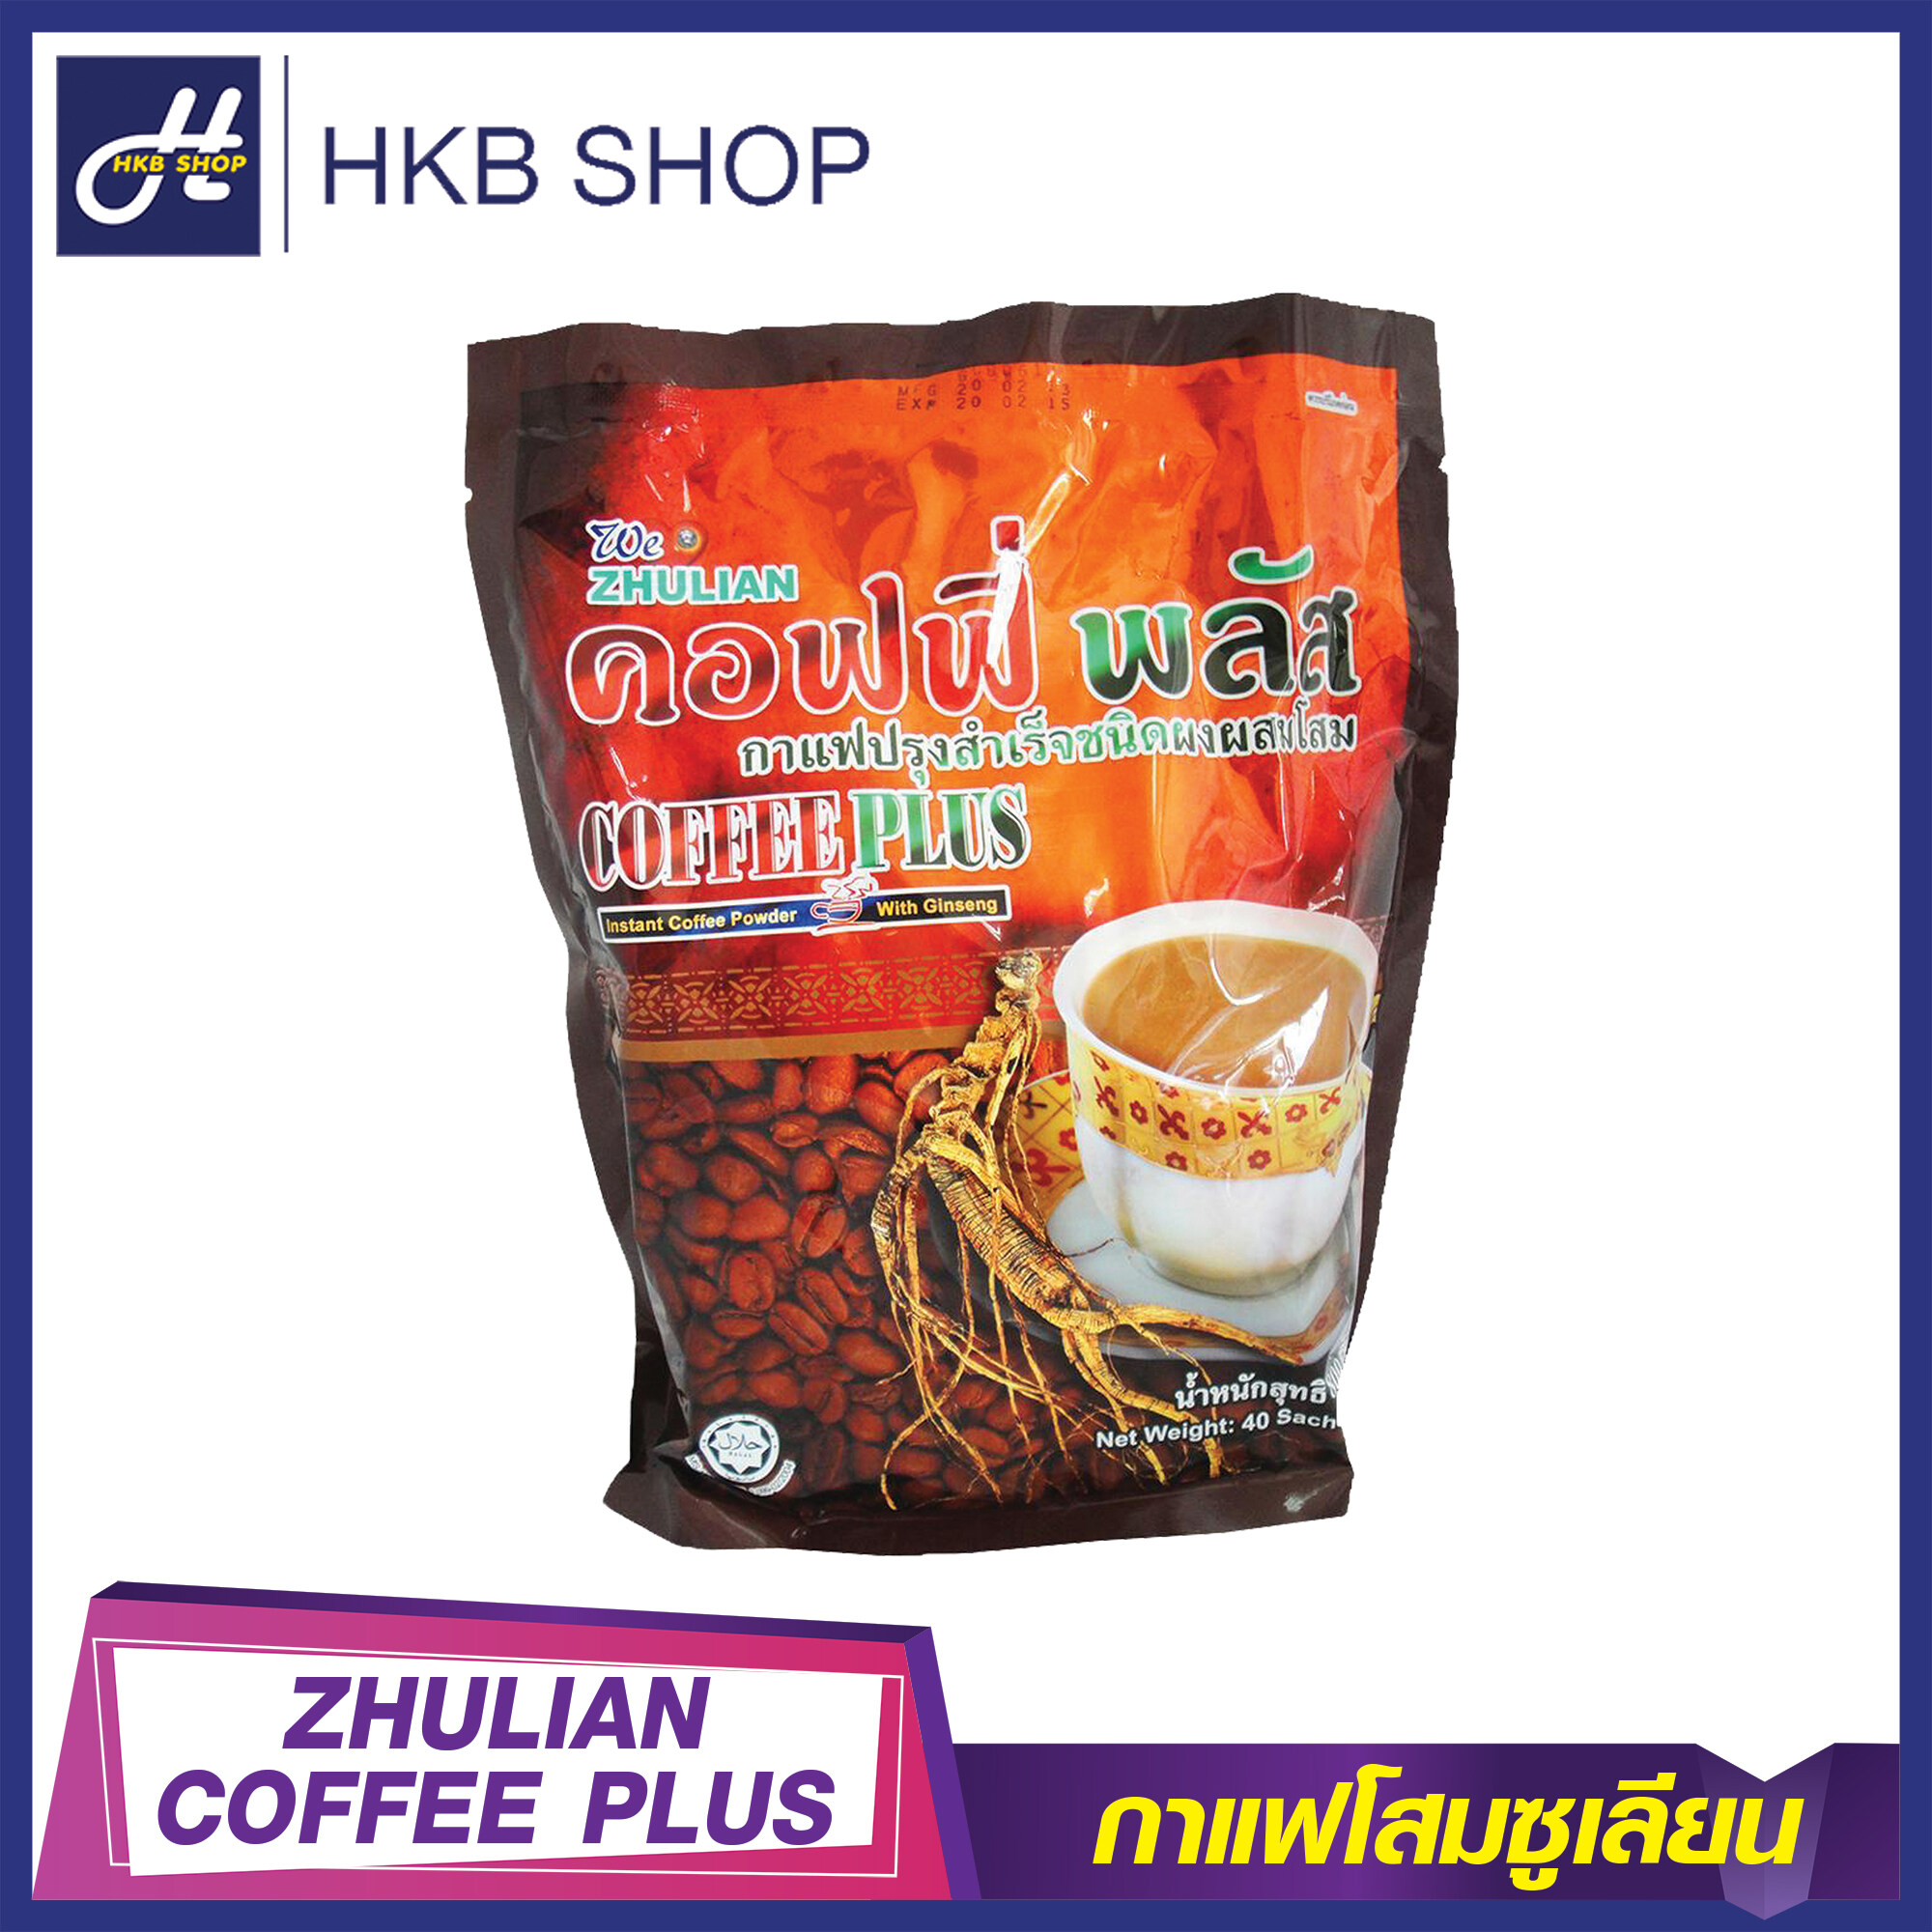 ⚡️1ห่อ/40ซอง⚡️ ZHULIAN COFFEE PLUS ซูเลียน คอฟฟี่พลัส กาแฟโสมซูเลียน By HKB SHOP